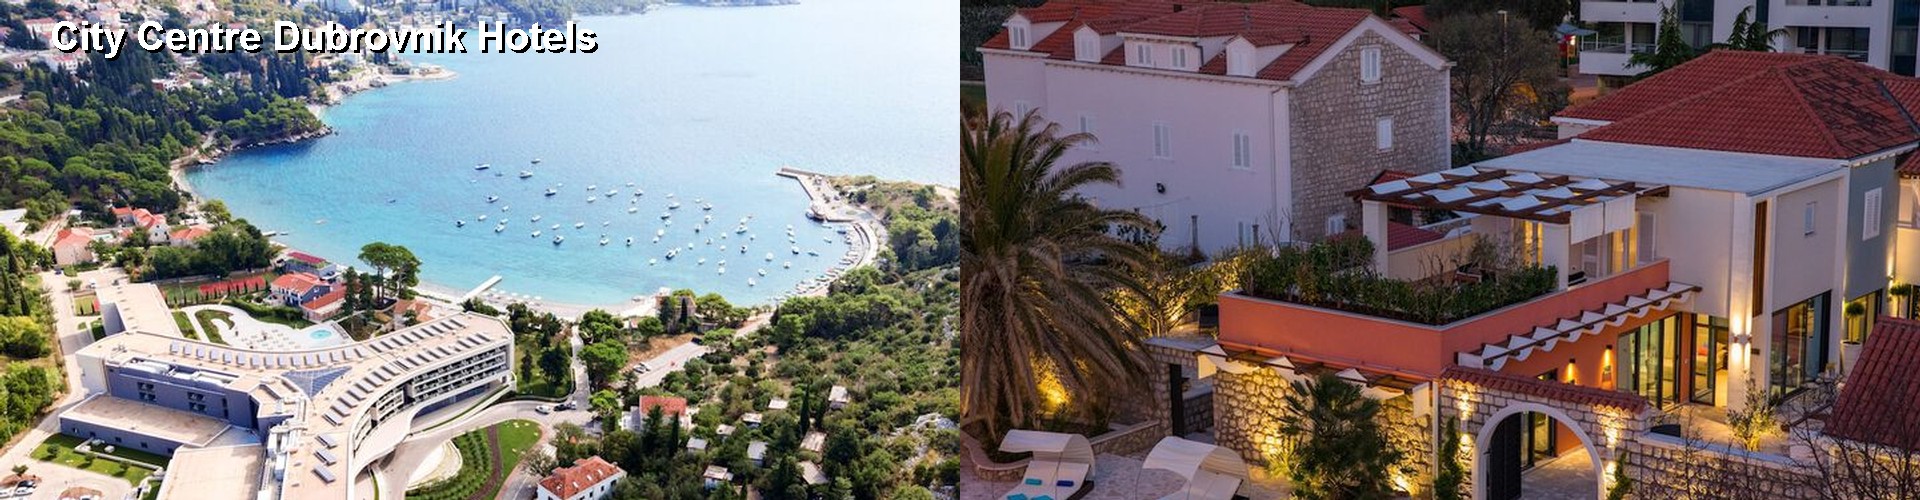 5 Best Hotels near City Centre Dubrovnik